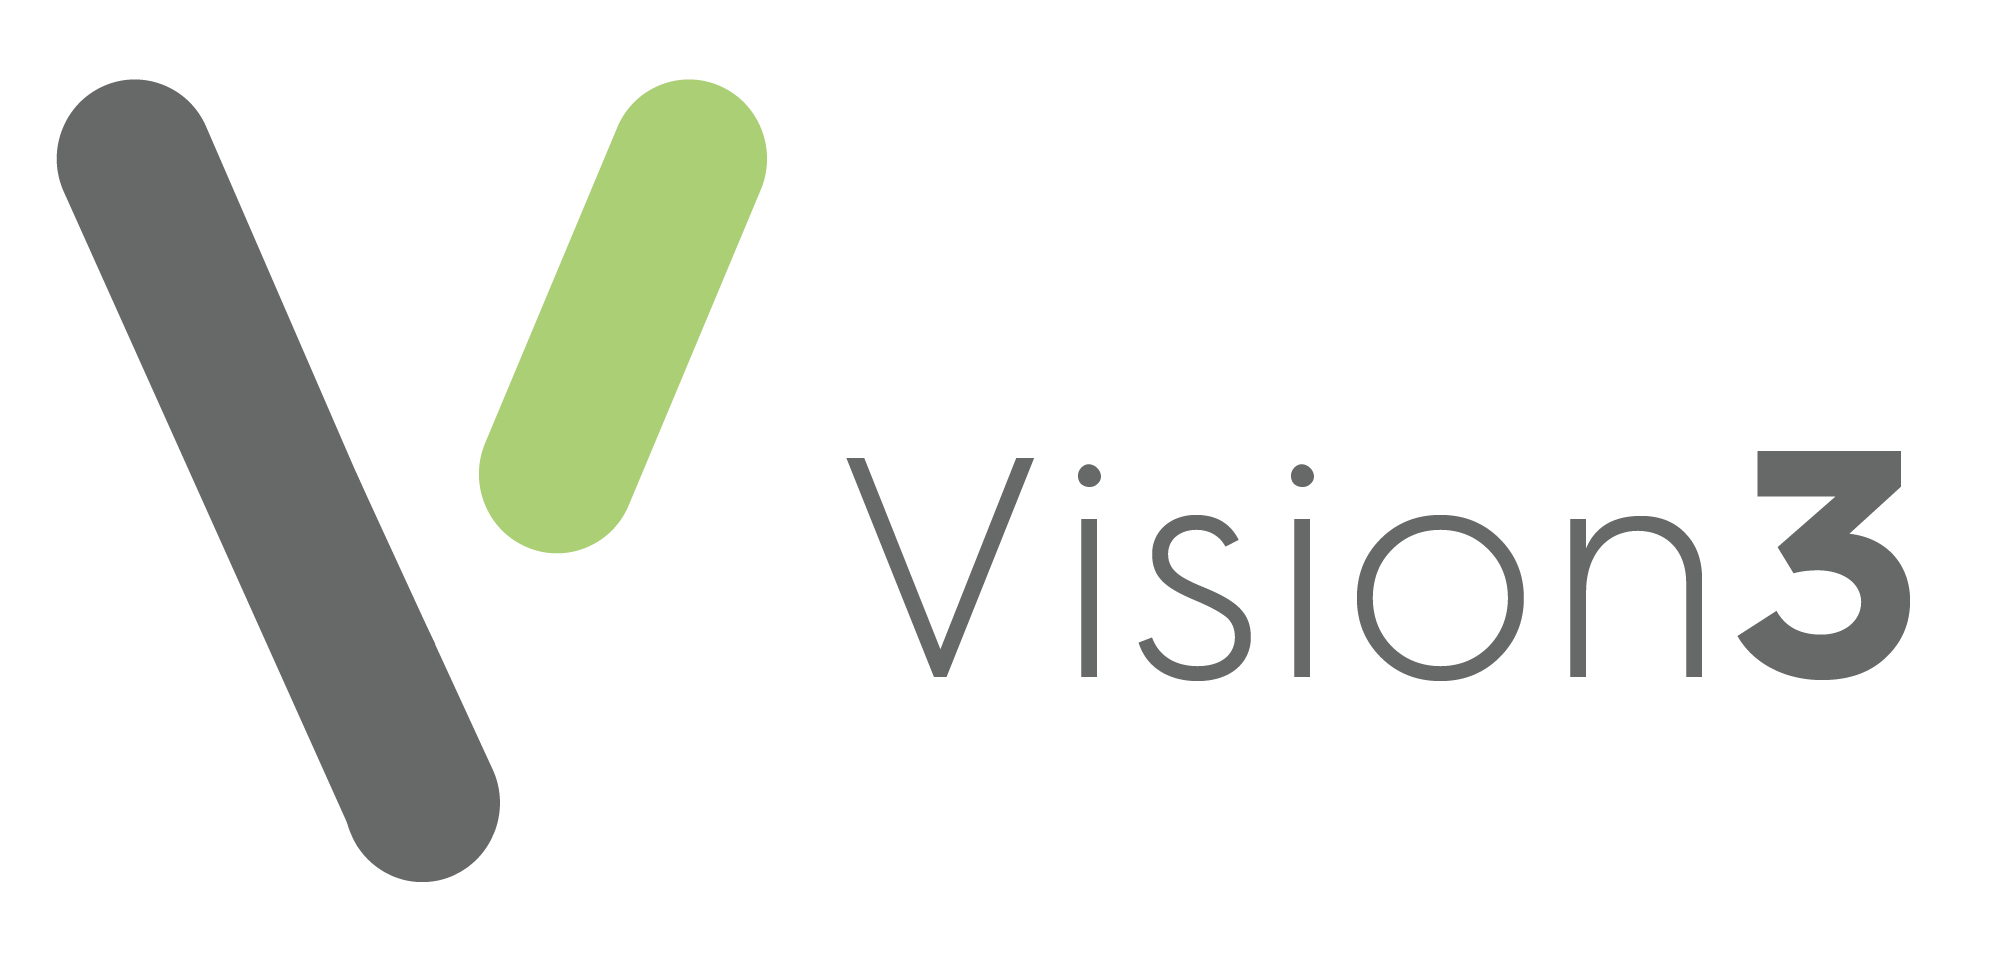 CHS_-Vision 3 logo-1